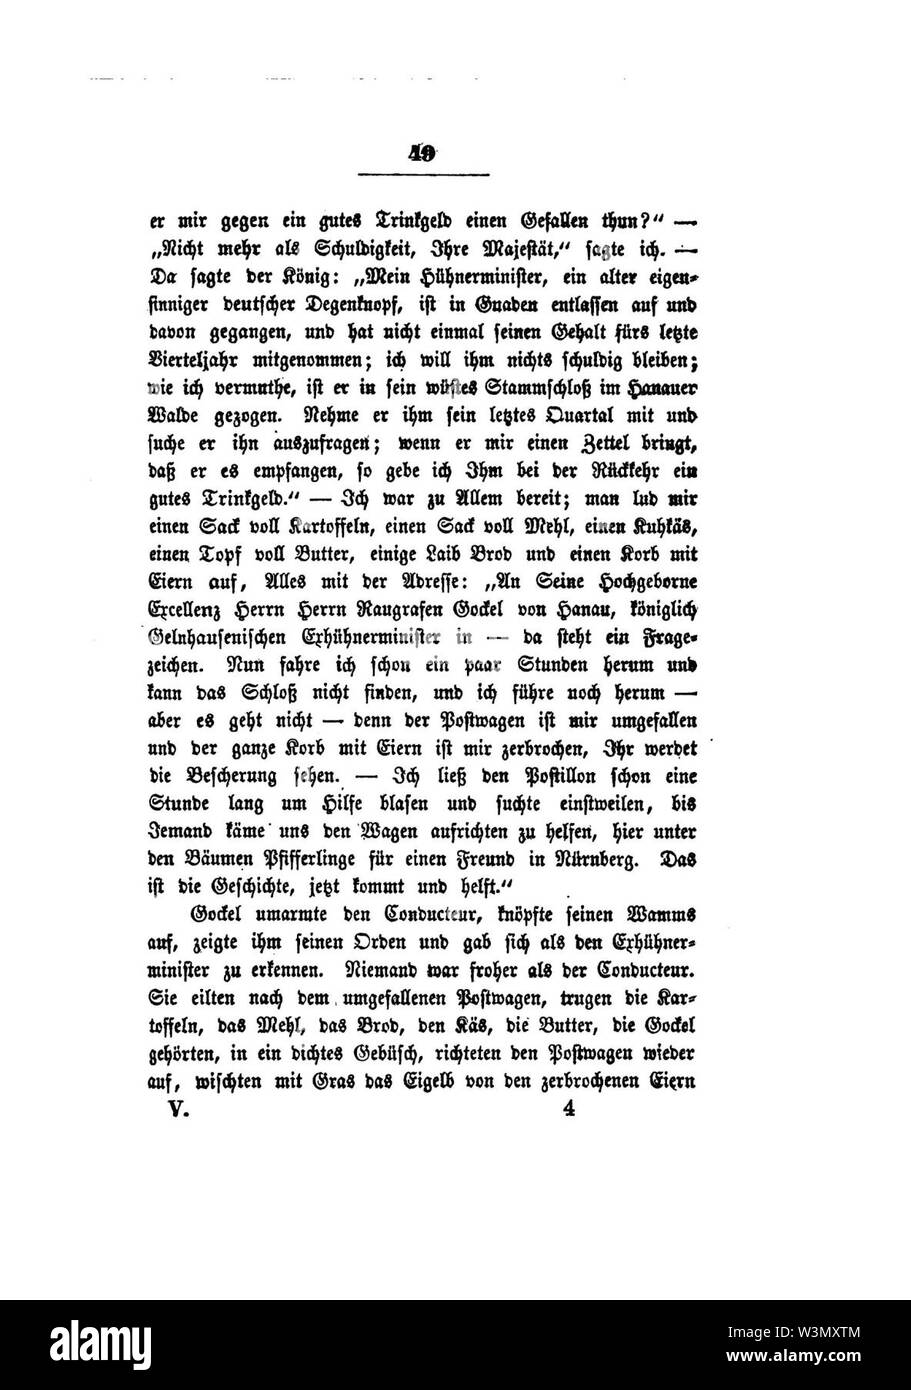 Clemens Brentano's gesammelte Schriften V 049. Stock Photo